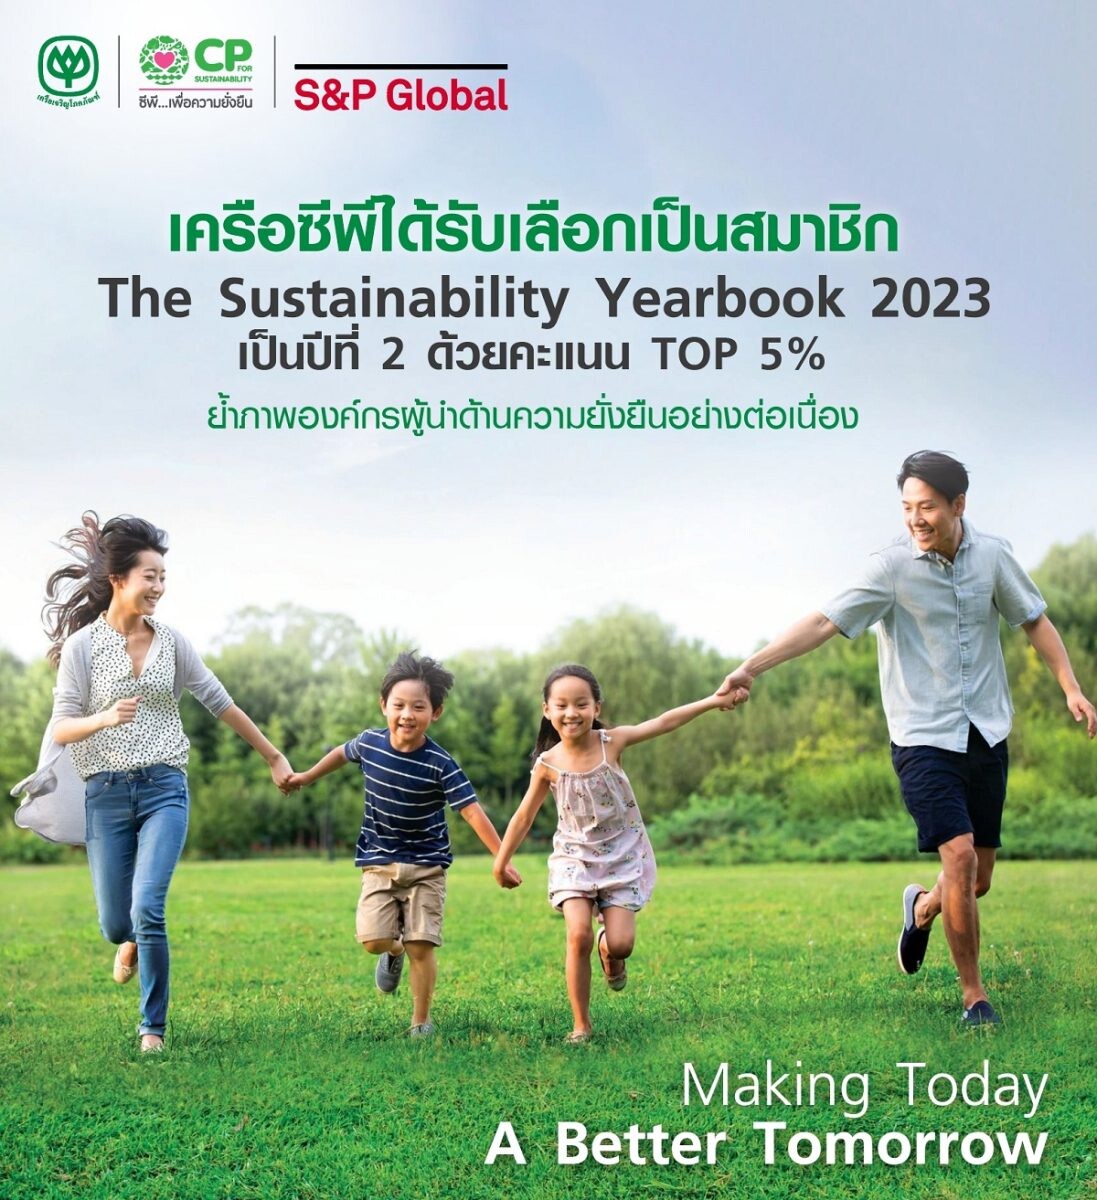 S&P Global ยกเครือซีพีเอกชนไทยรายเดียวติดสมาชิกความยั่งยืนระดับโลกกลุ่มอุตสาหกรรม Industrial Conglomerates ใน The Sustainability Yearbook 2023 ต่อเนื่อง 2 ปีซ้อน